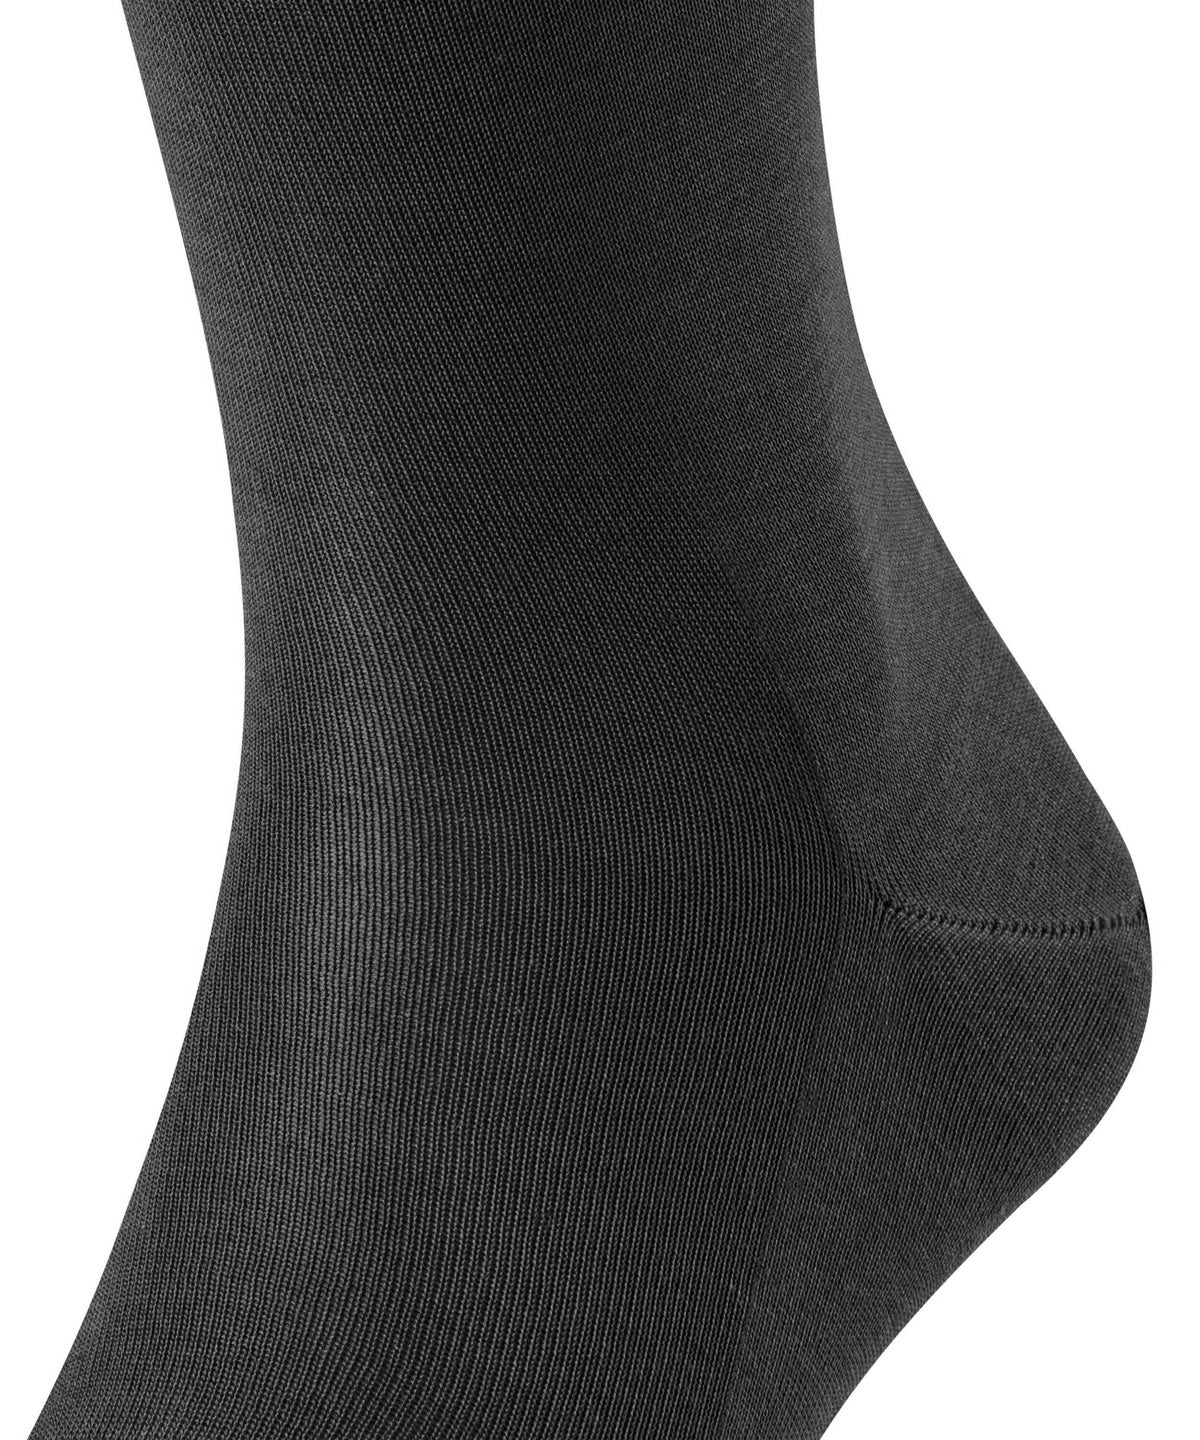 black knee-high dress sock